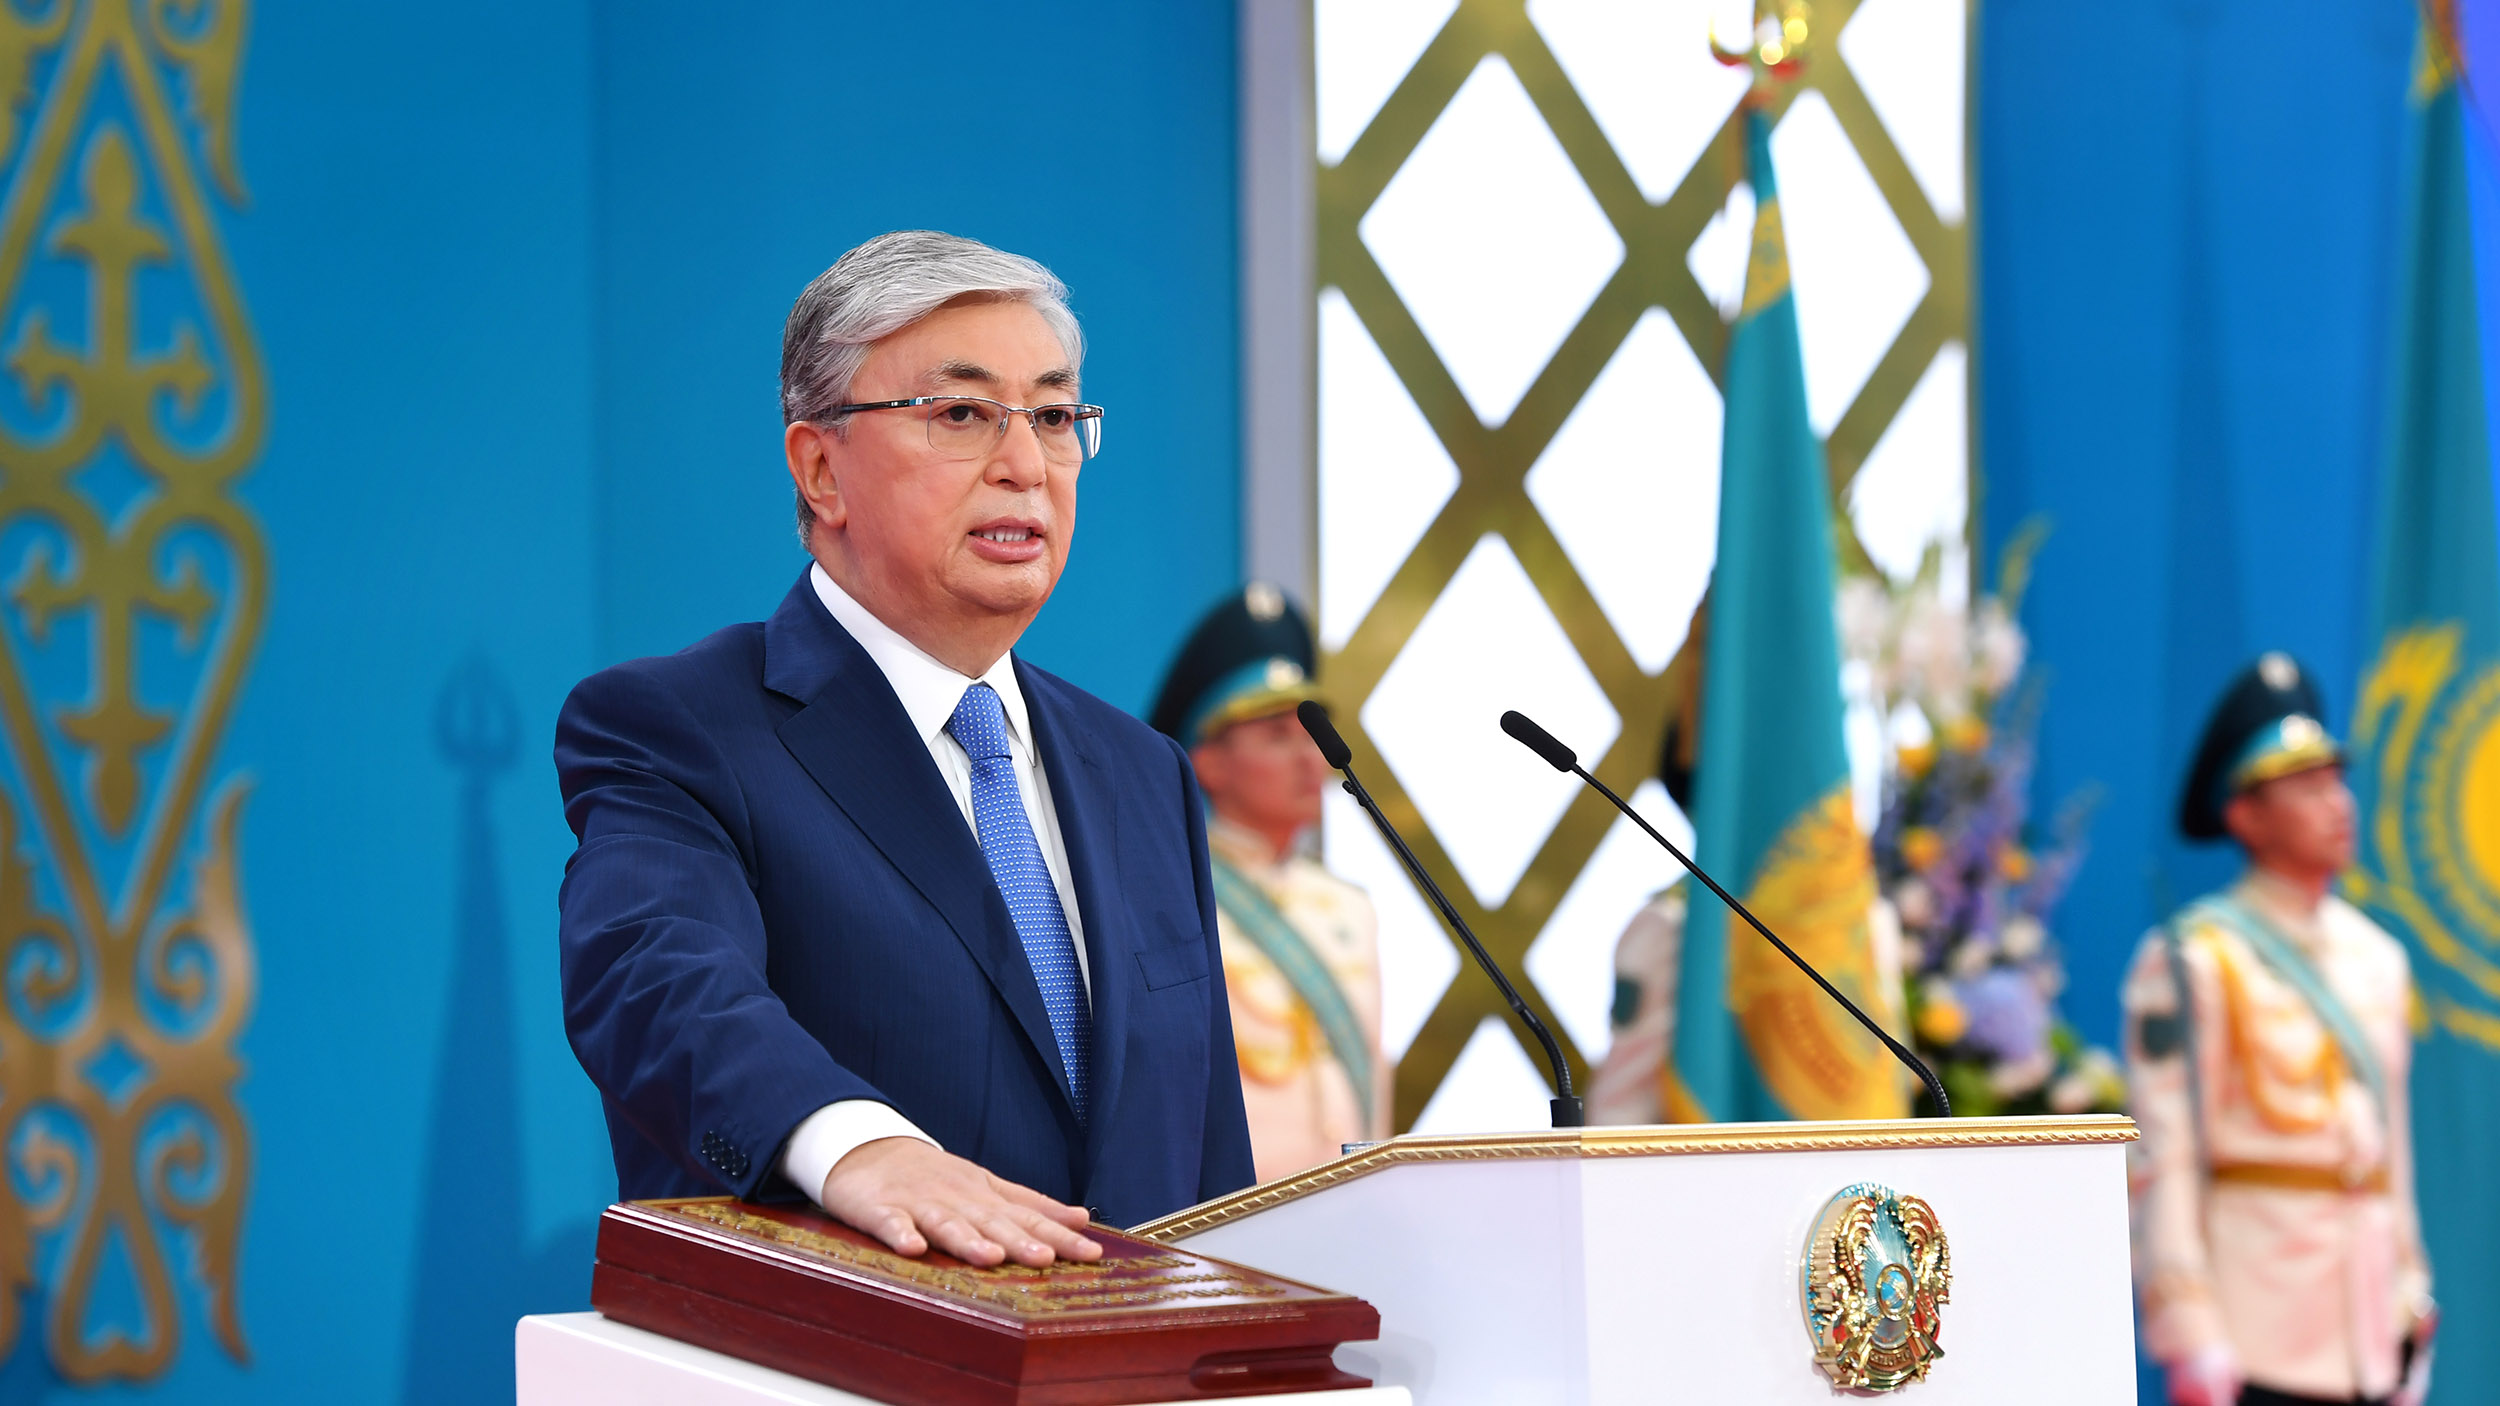 Kassym-Jomart Tokayev inaugurated as President of Kazakhstan